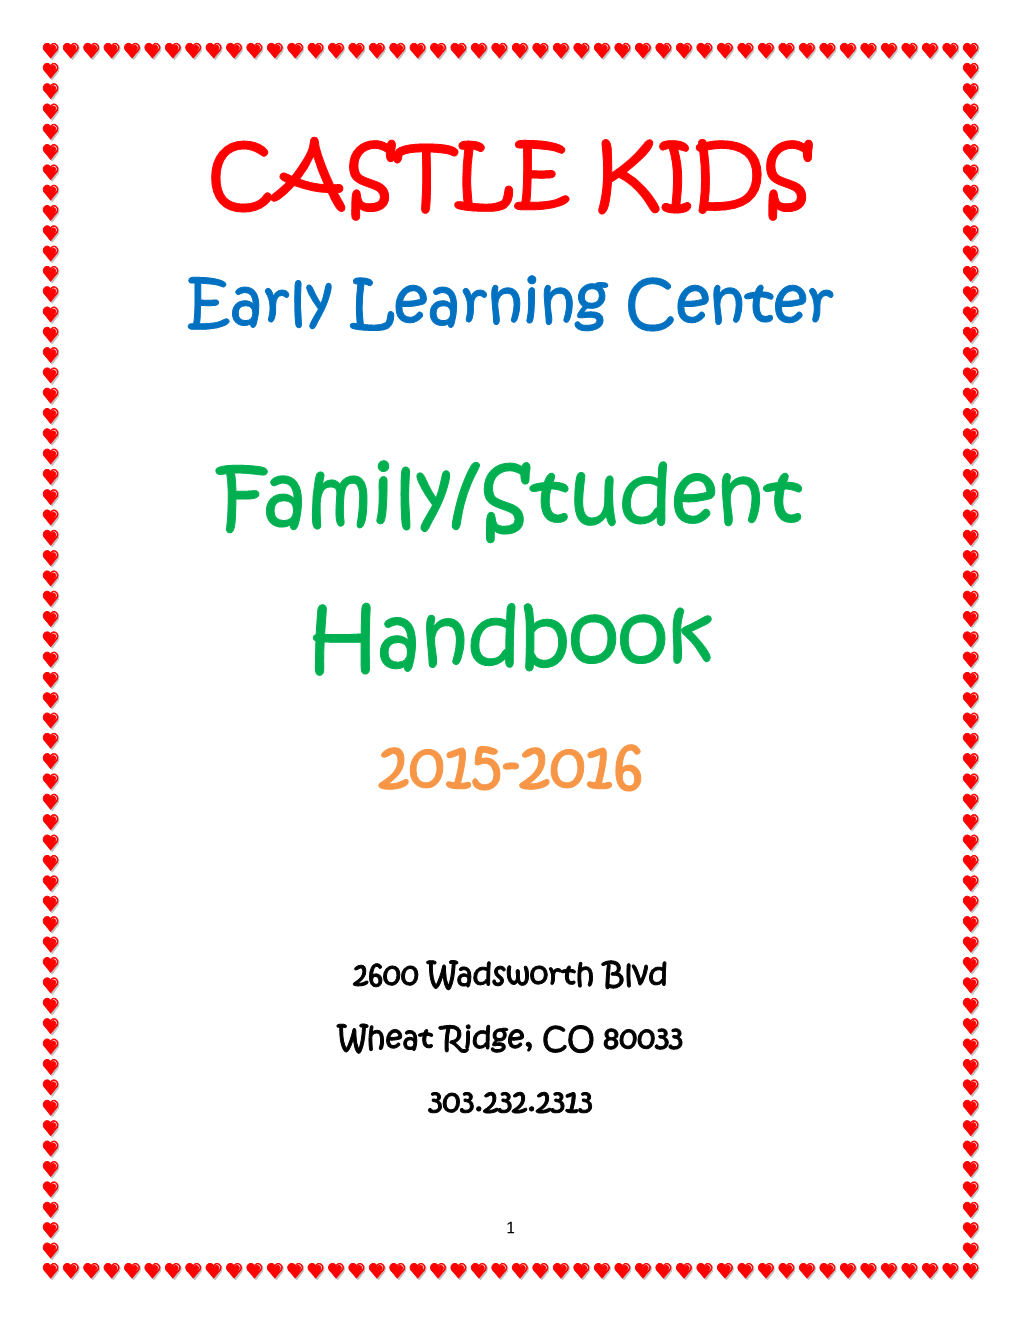 CASTLE KIDS Family/Student Handbook